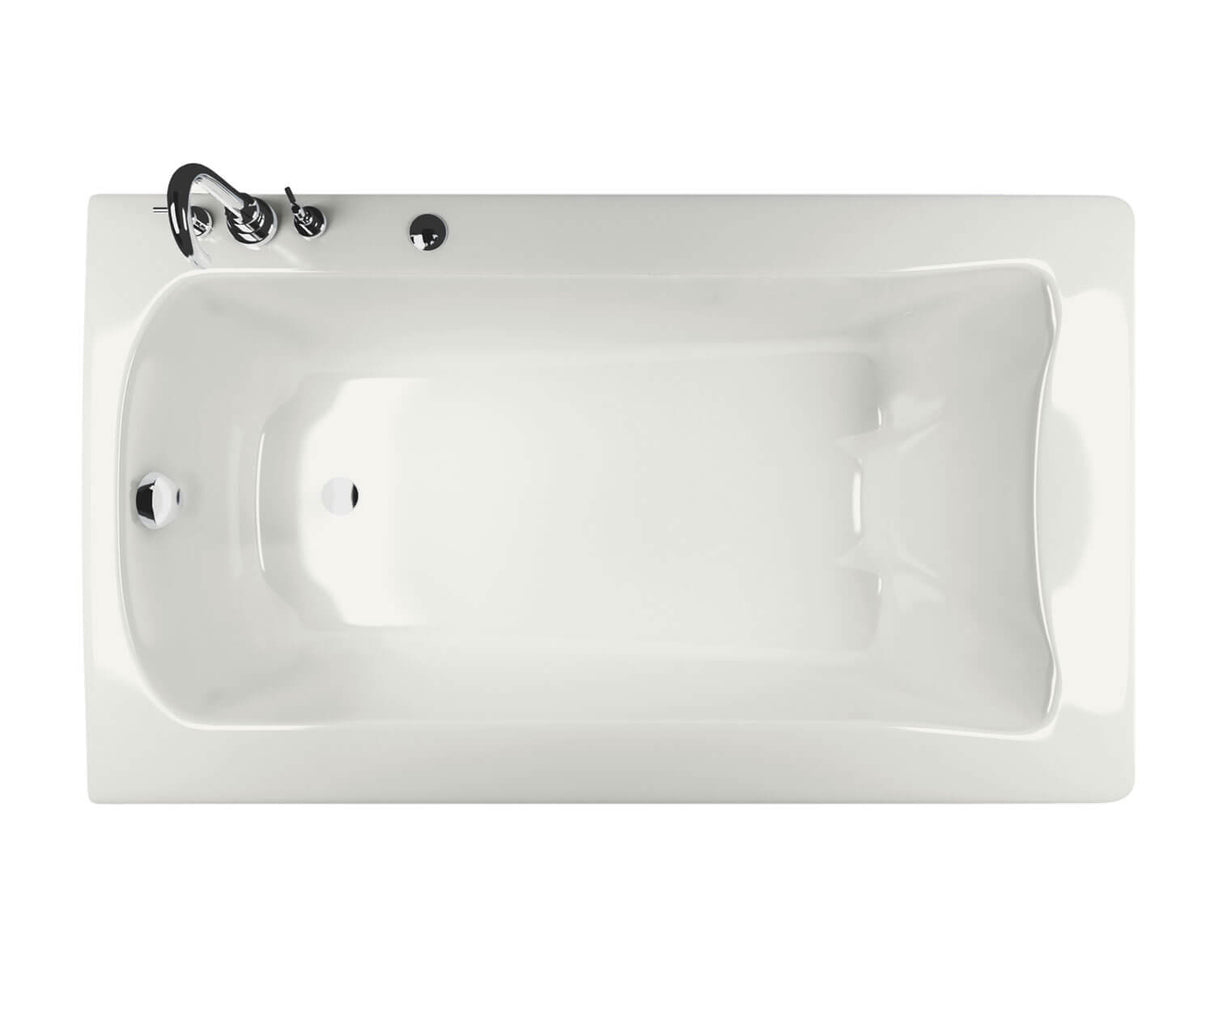 MAAX 105311-L-004-001 Release 6036 Acrylic Drop-in Left-Hand Drain Hydromax Bathtub in White